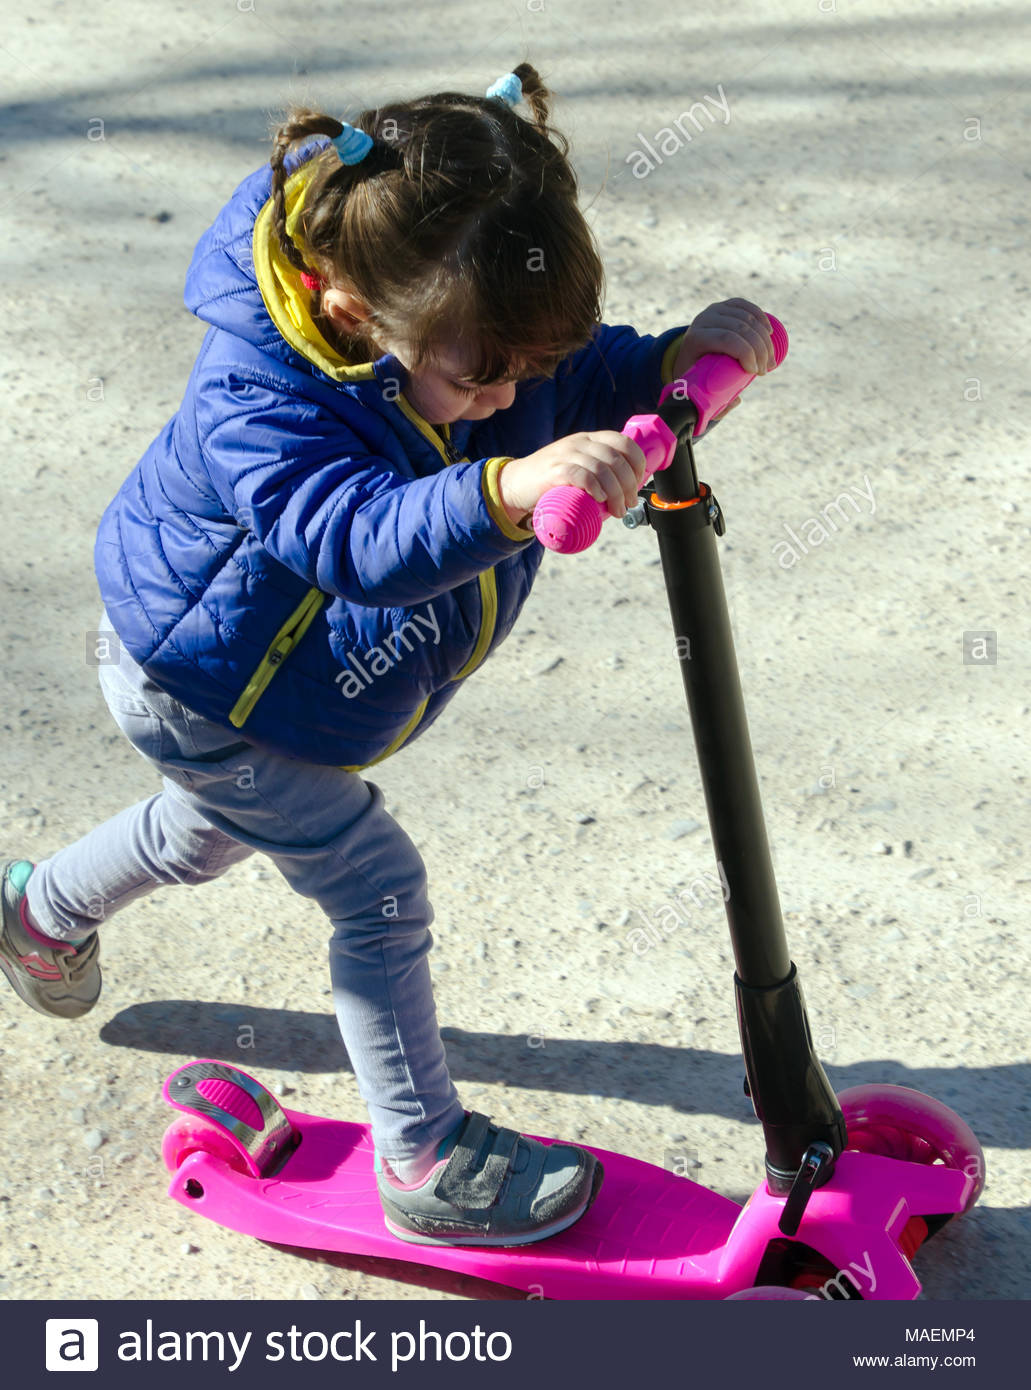 skate scooty for kids